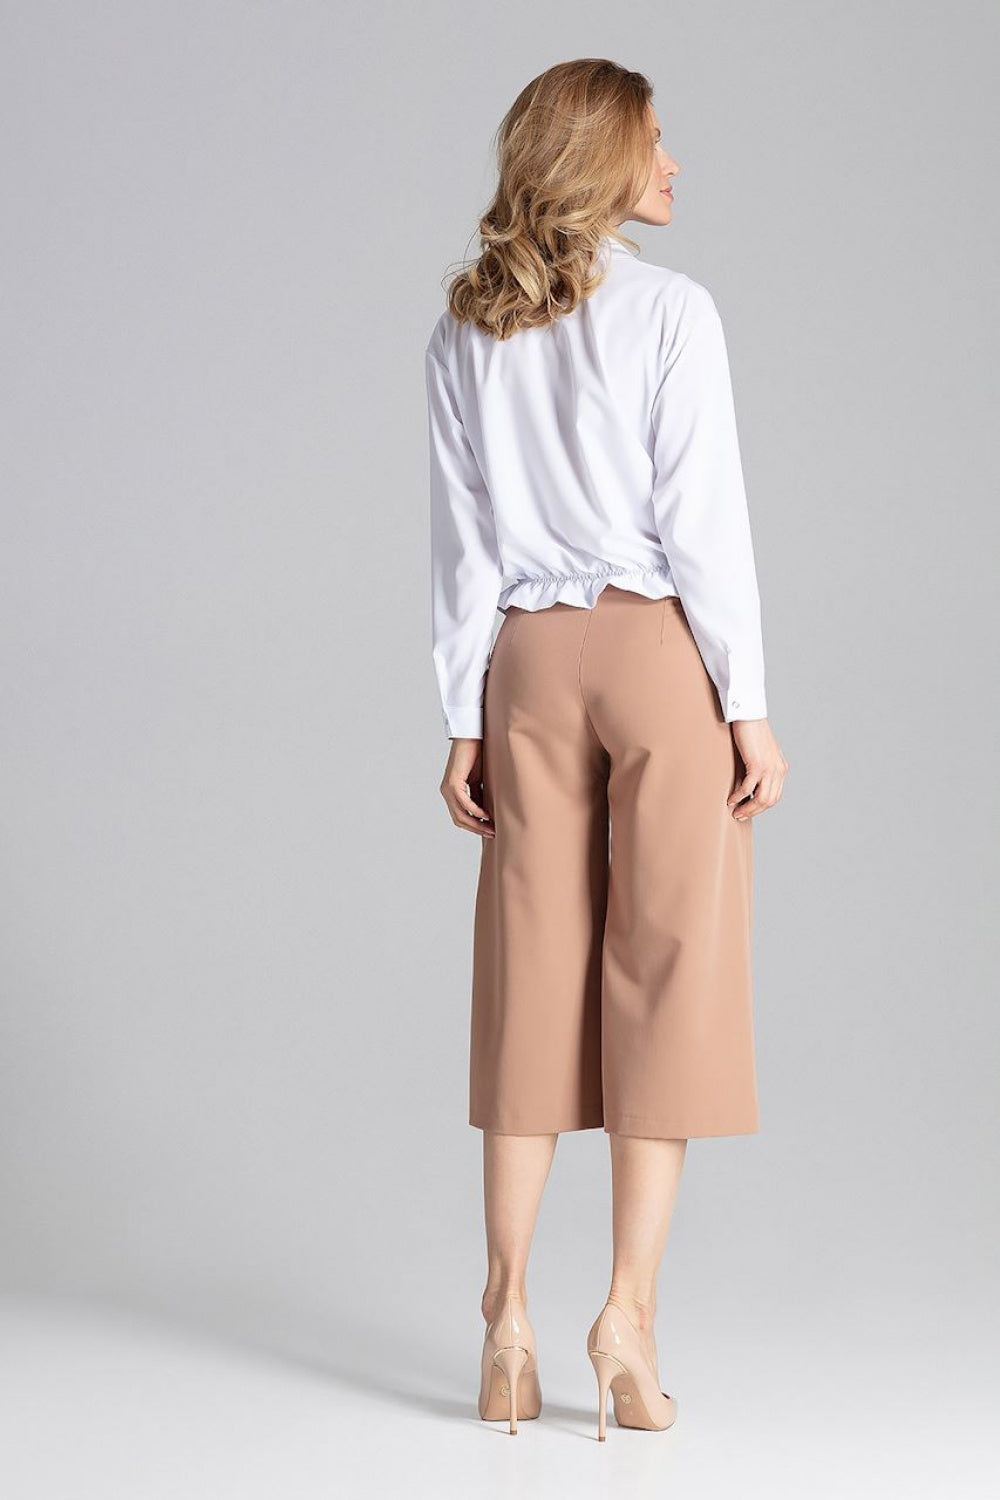 Women trousers model 129787 Elsy Style Pants, Trousers, Shorts